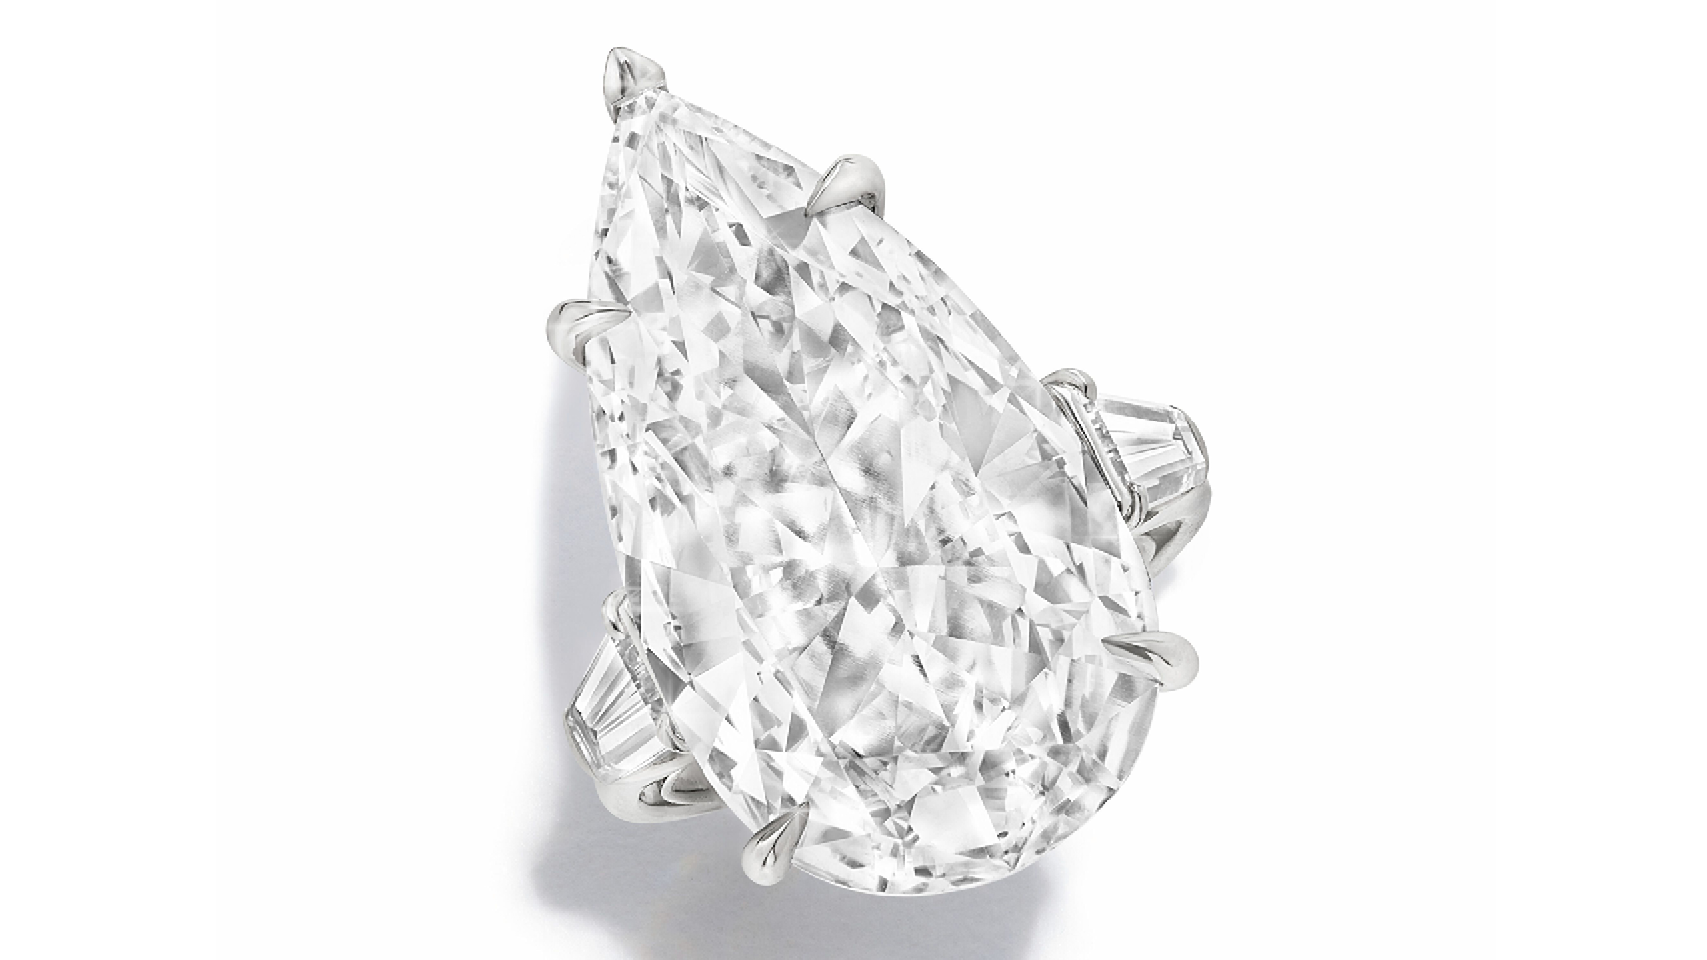 D-color, VVS2-clarity stone on Harry Winston ring boasts high estimate of $1 million.
